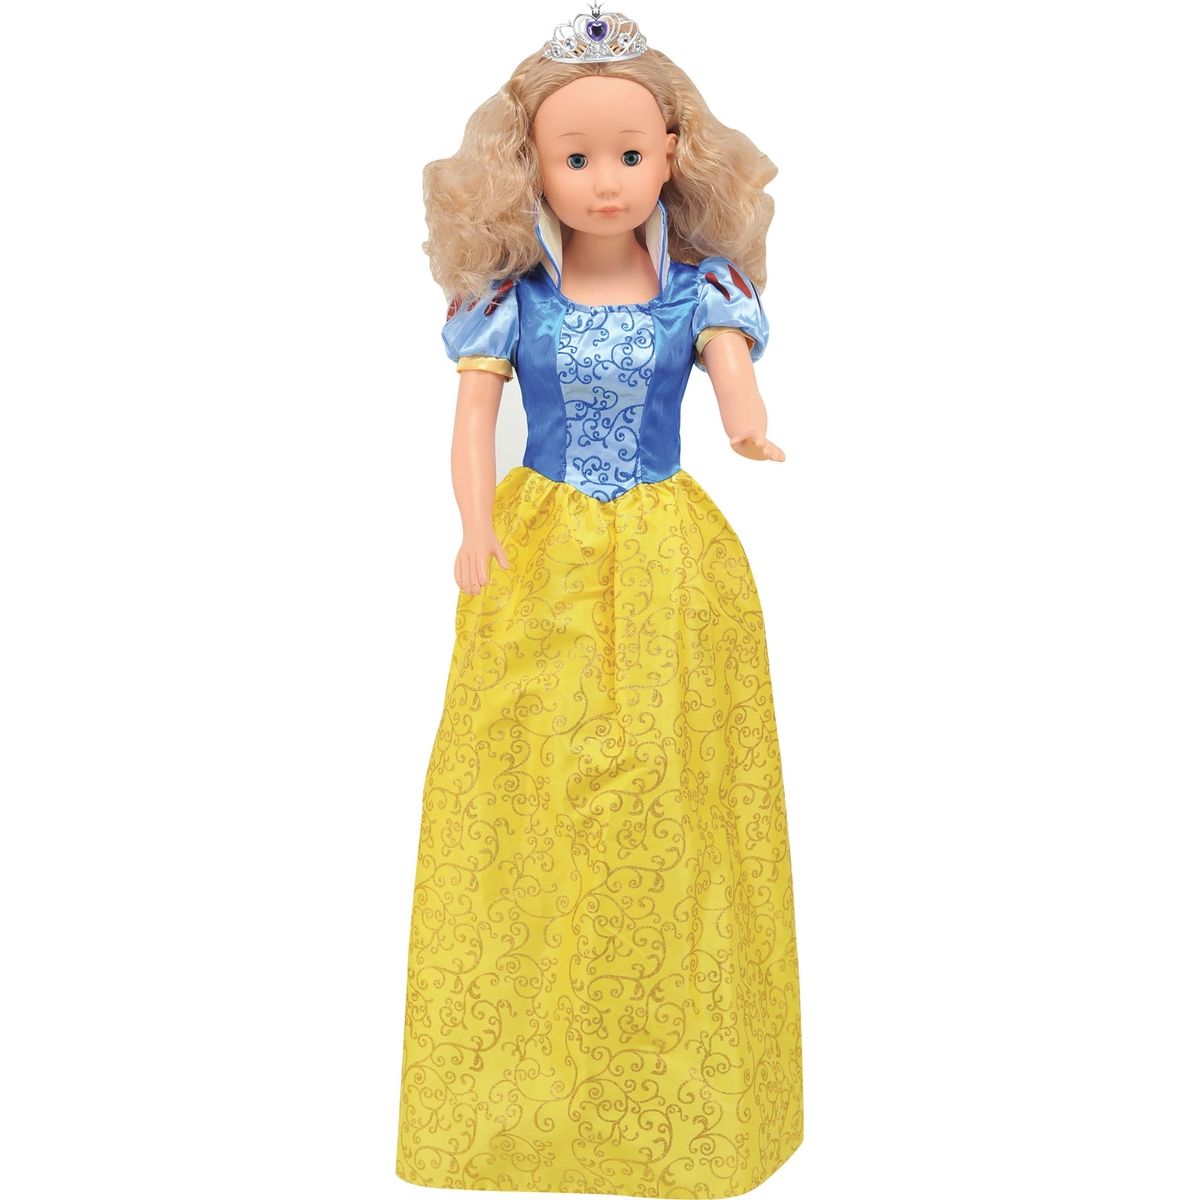 Dimian Panenka Bambolina Molly princezna 90cm - Žluto-modré šaty